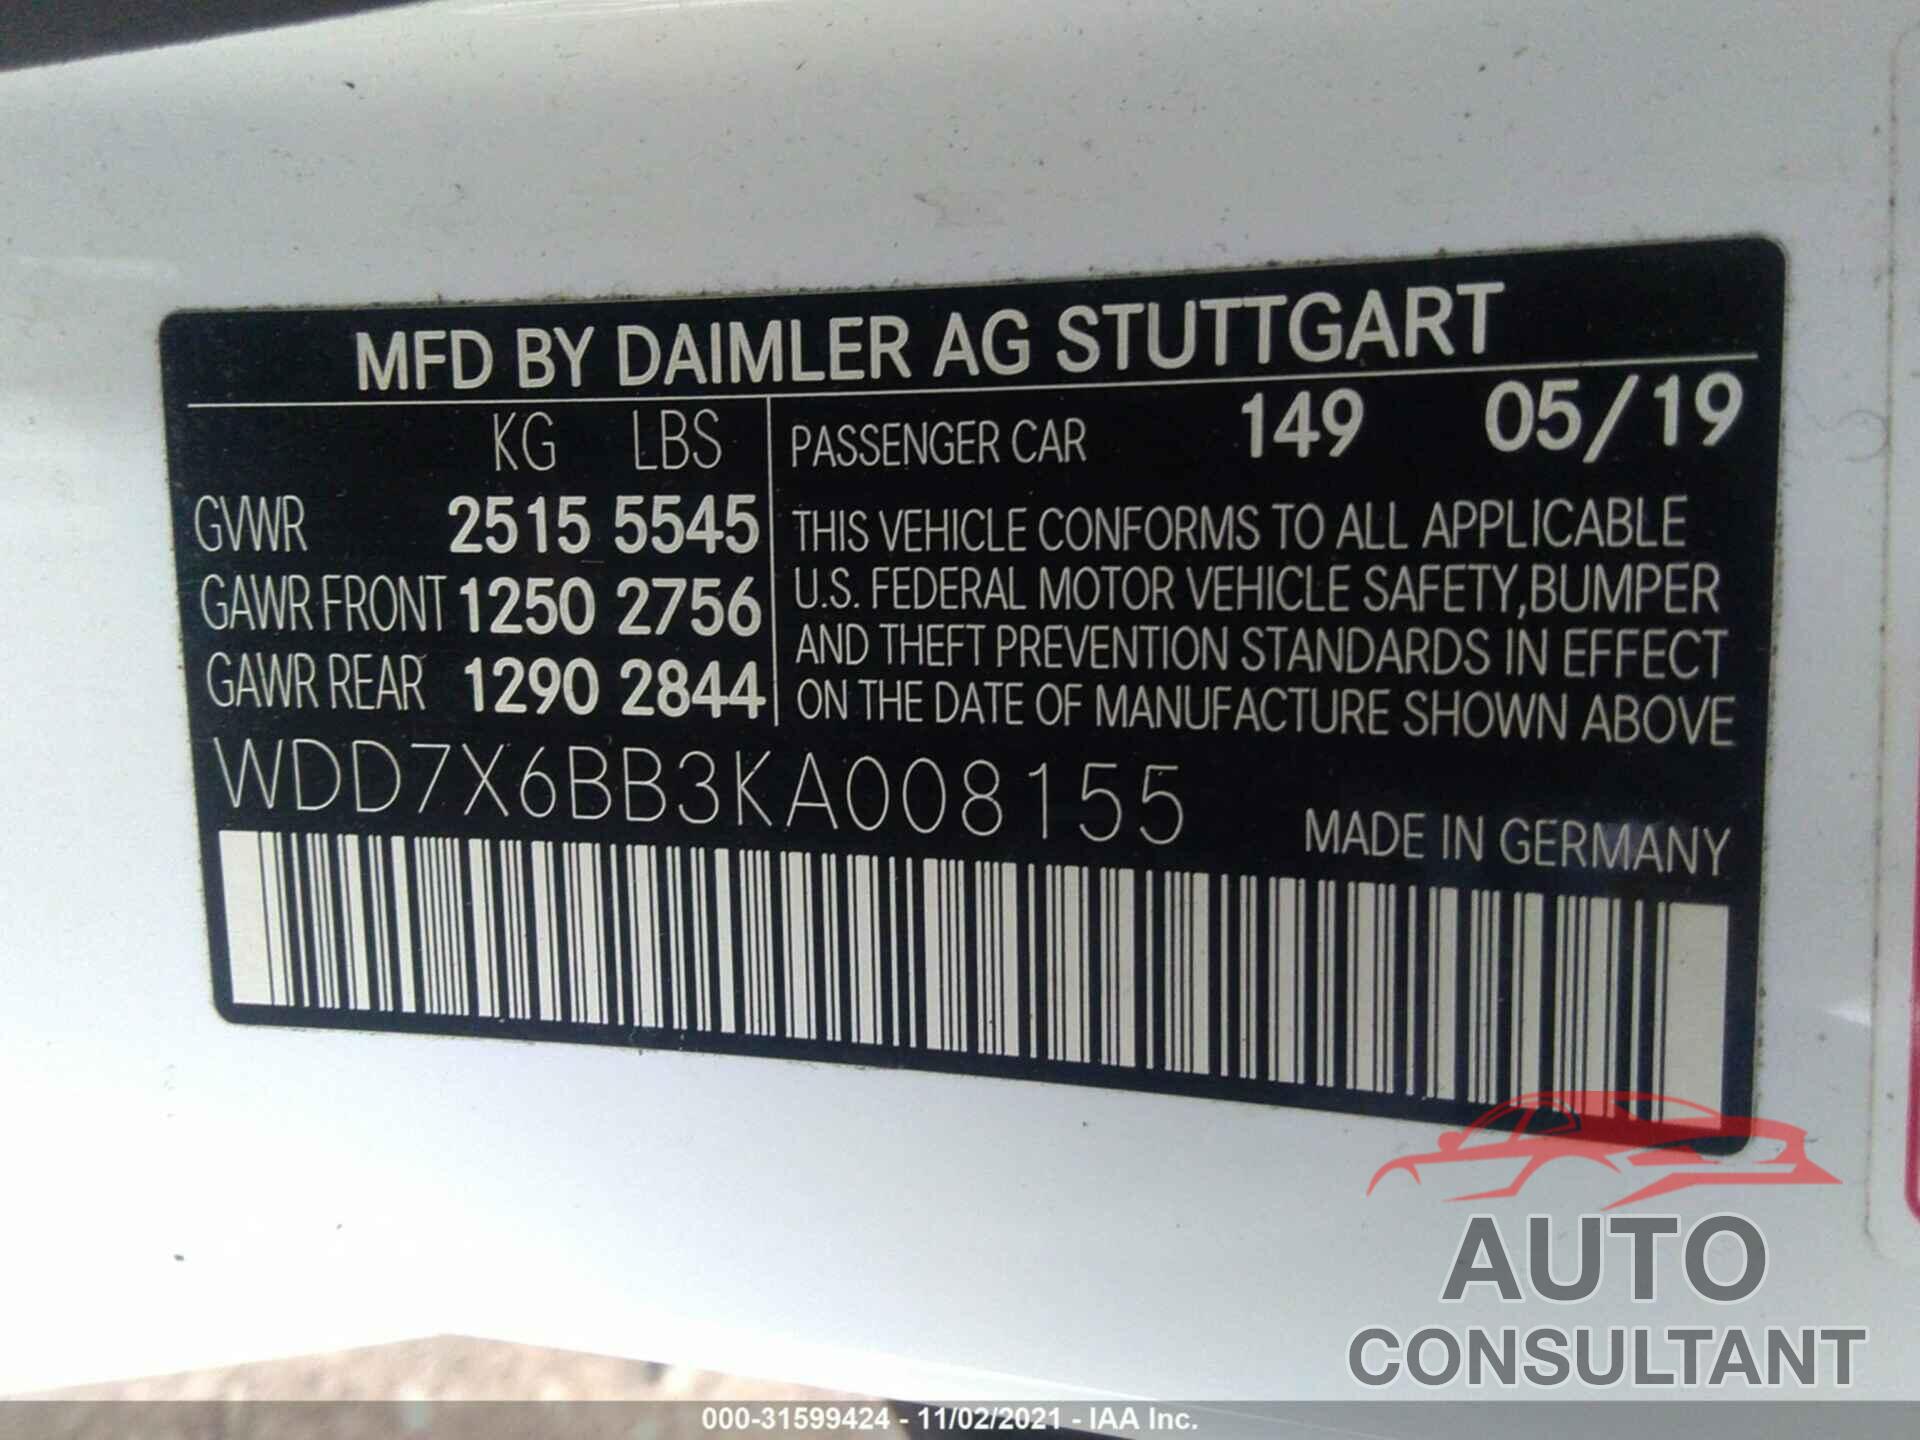 MERCEDES-BENZ AMG GT 2019 - WDD7X6BB3KA008155